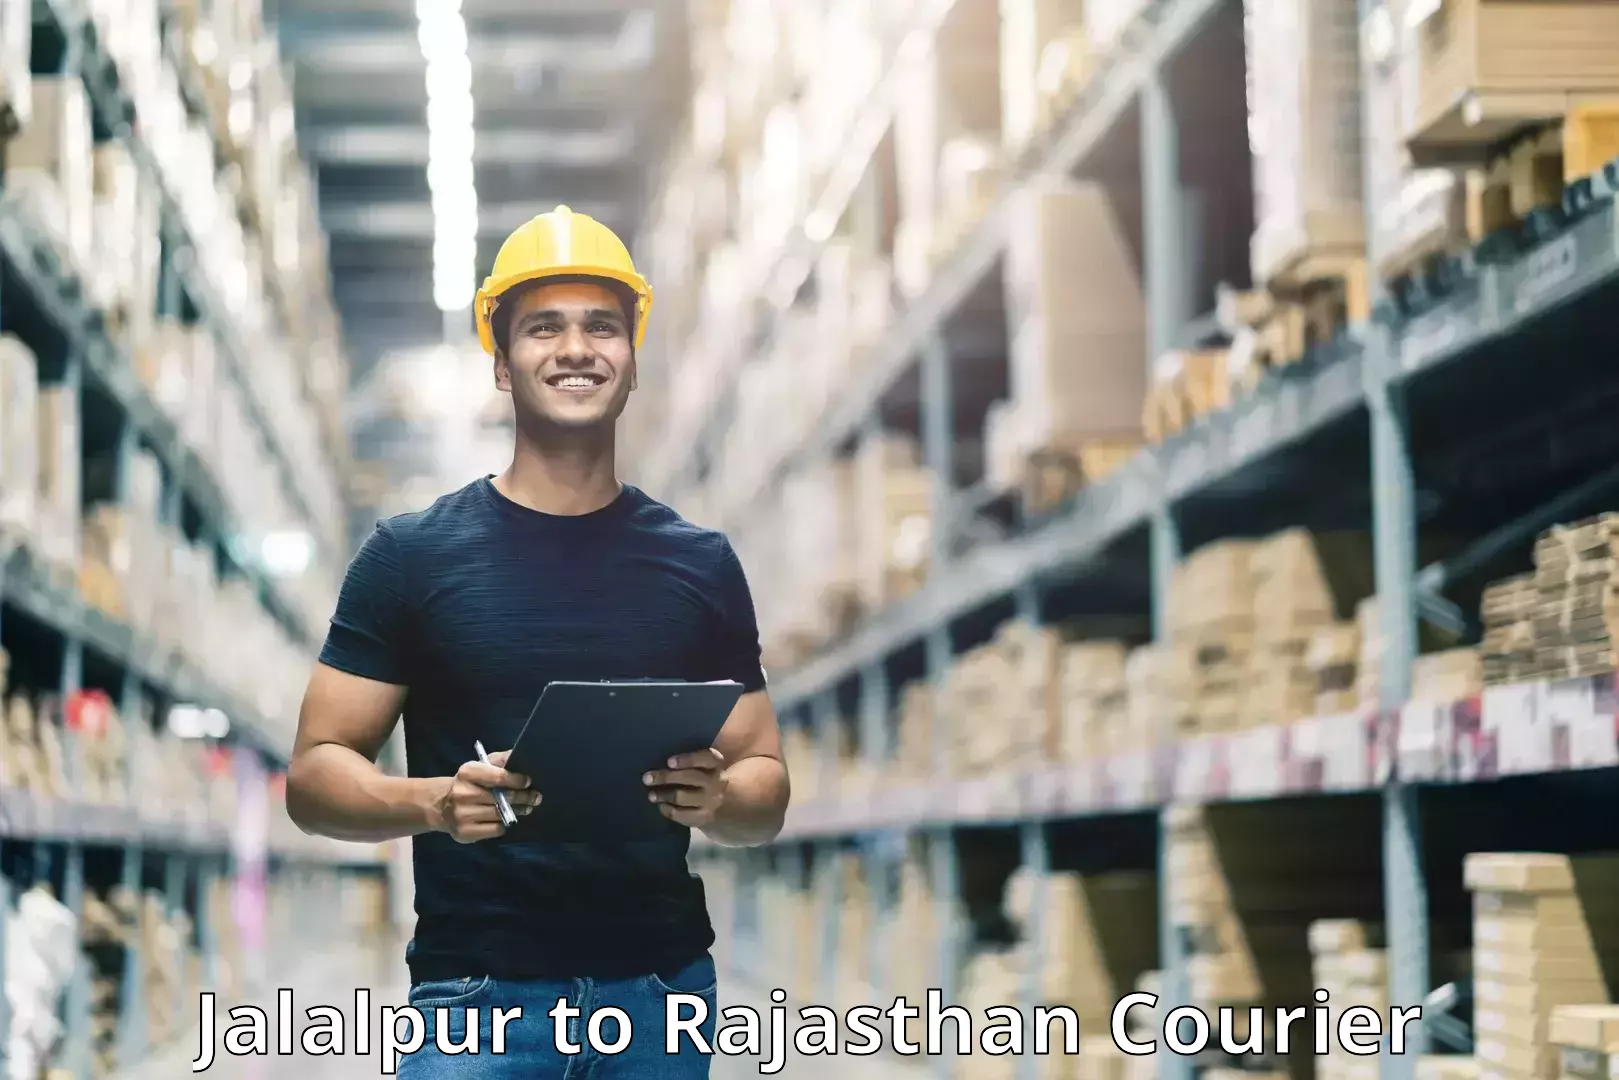 Courier service comparison Jalalpur to Rajasthan